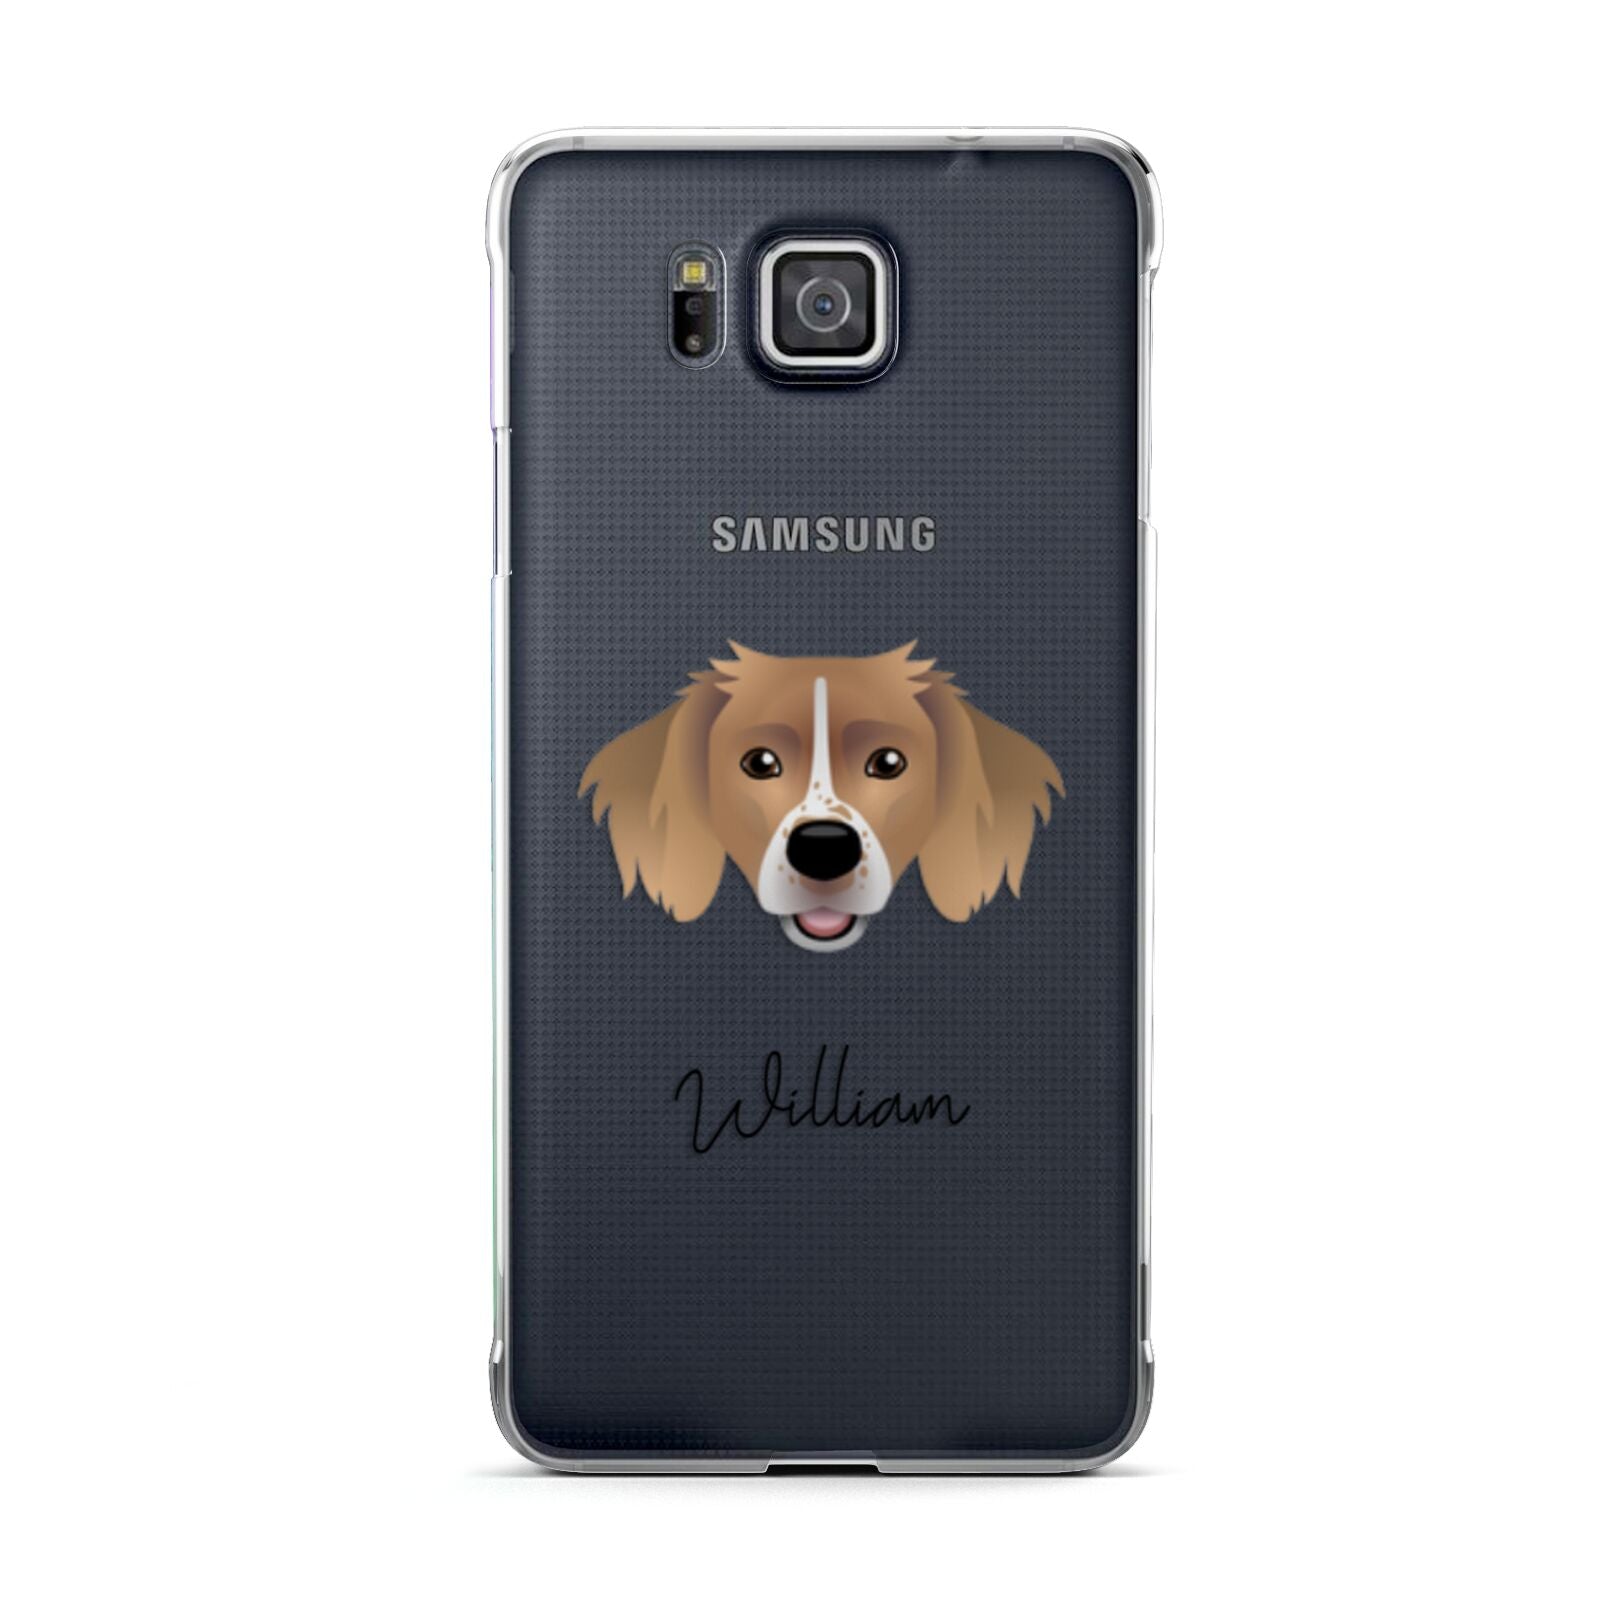 Sprollie Personalised Samsung Galaxy Alpha Case